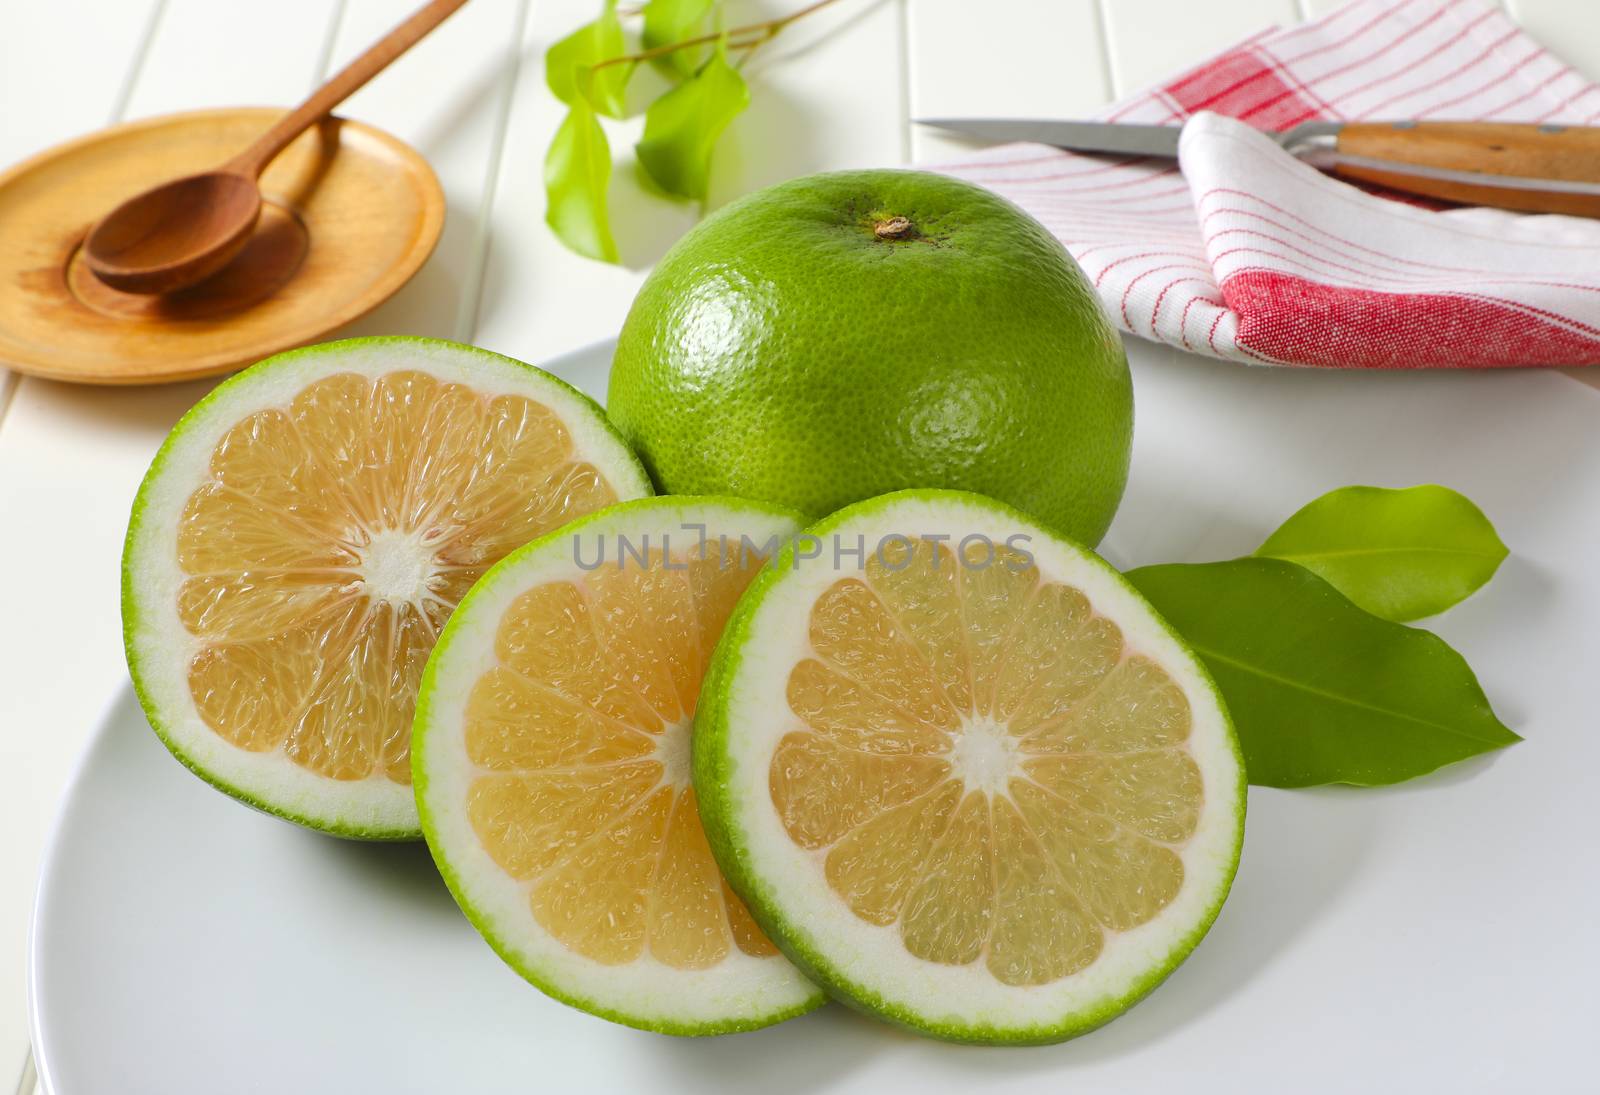 Sweetie fruit (green grapefruit, pomelit) by Digifoodstock